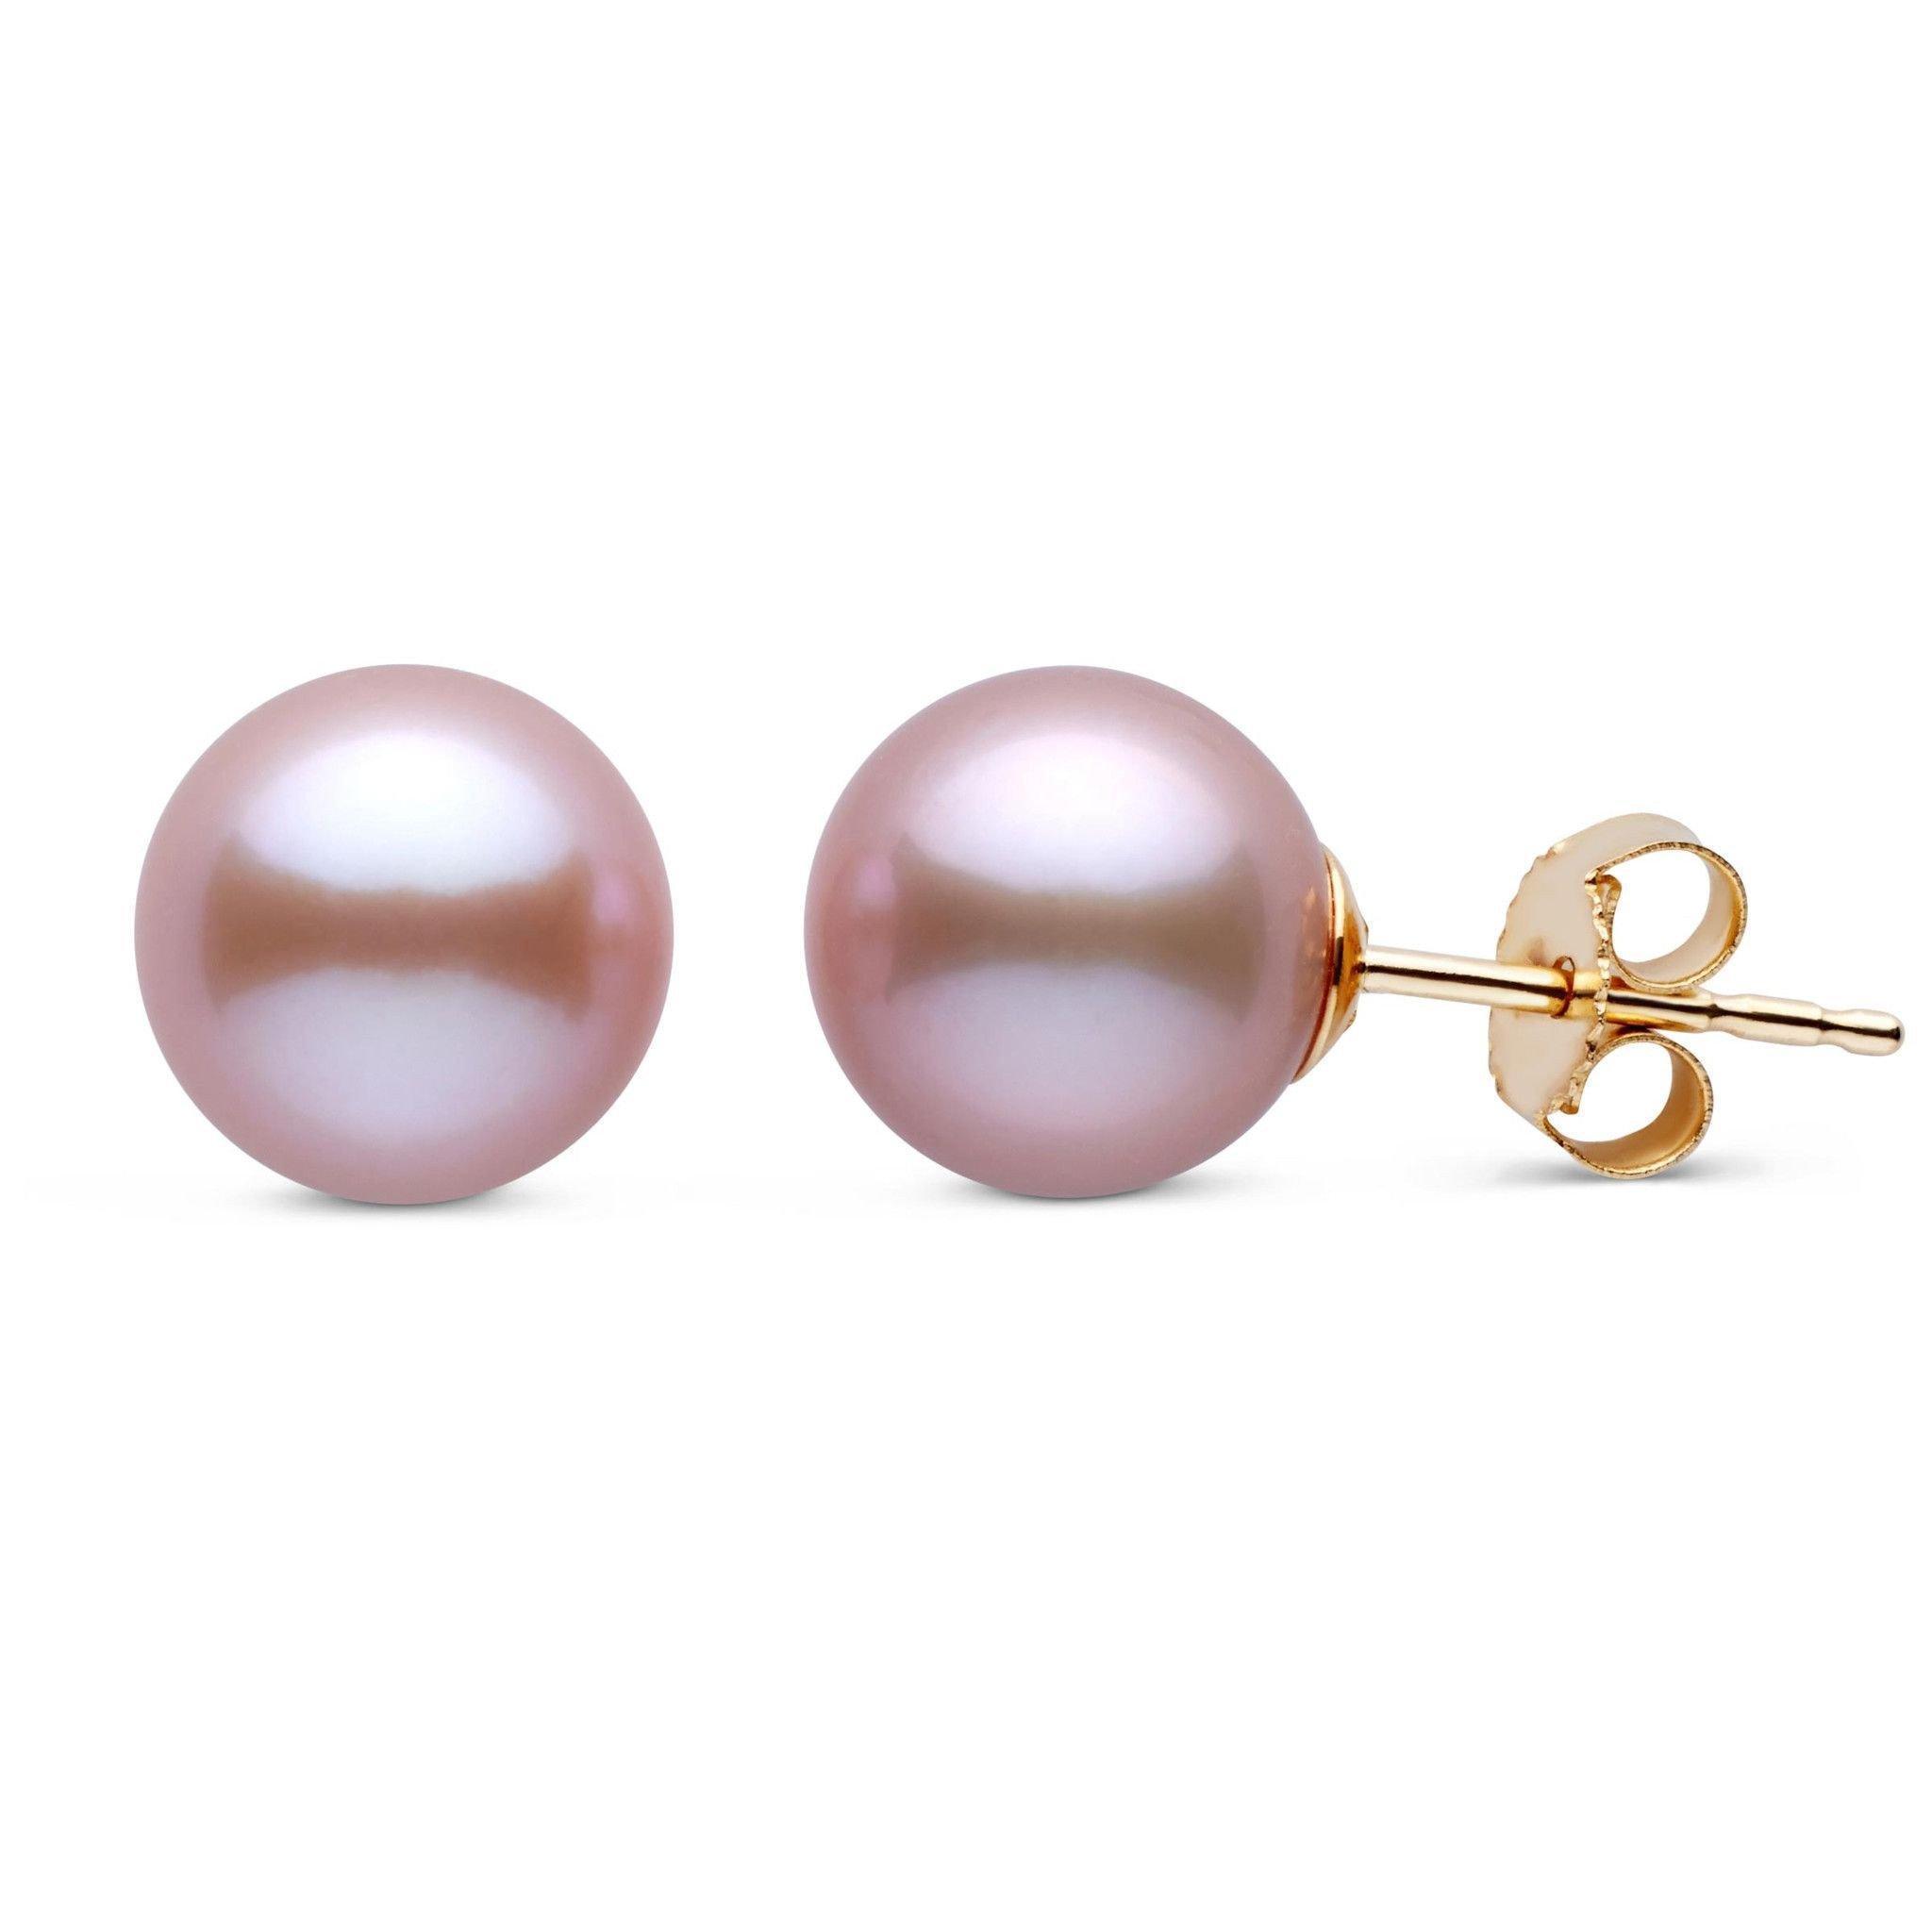 Buy Silver Pearl Earrings Online in India  GIVA